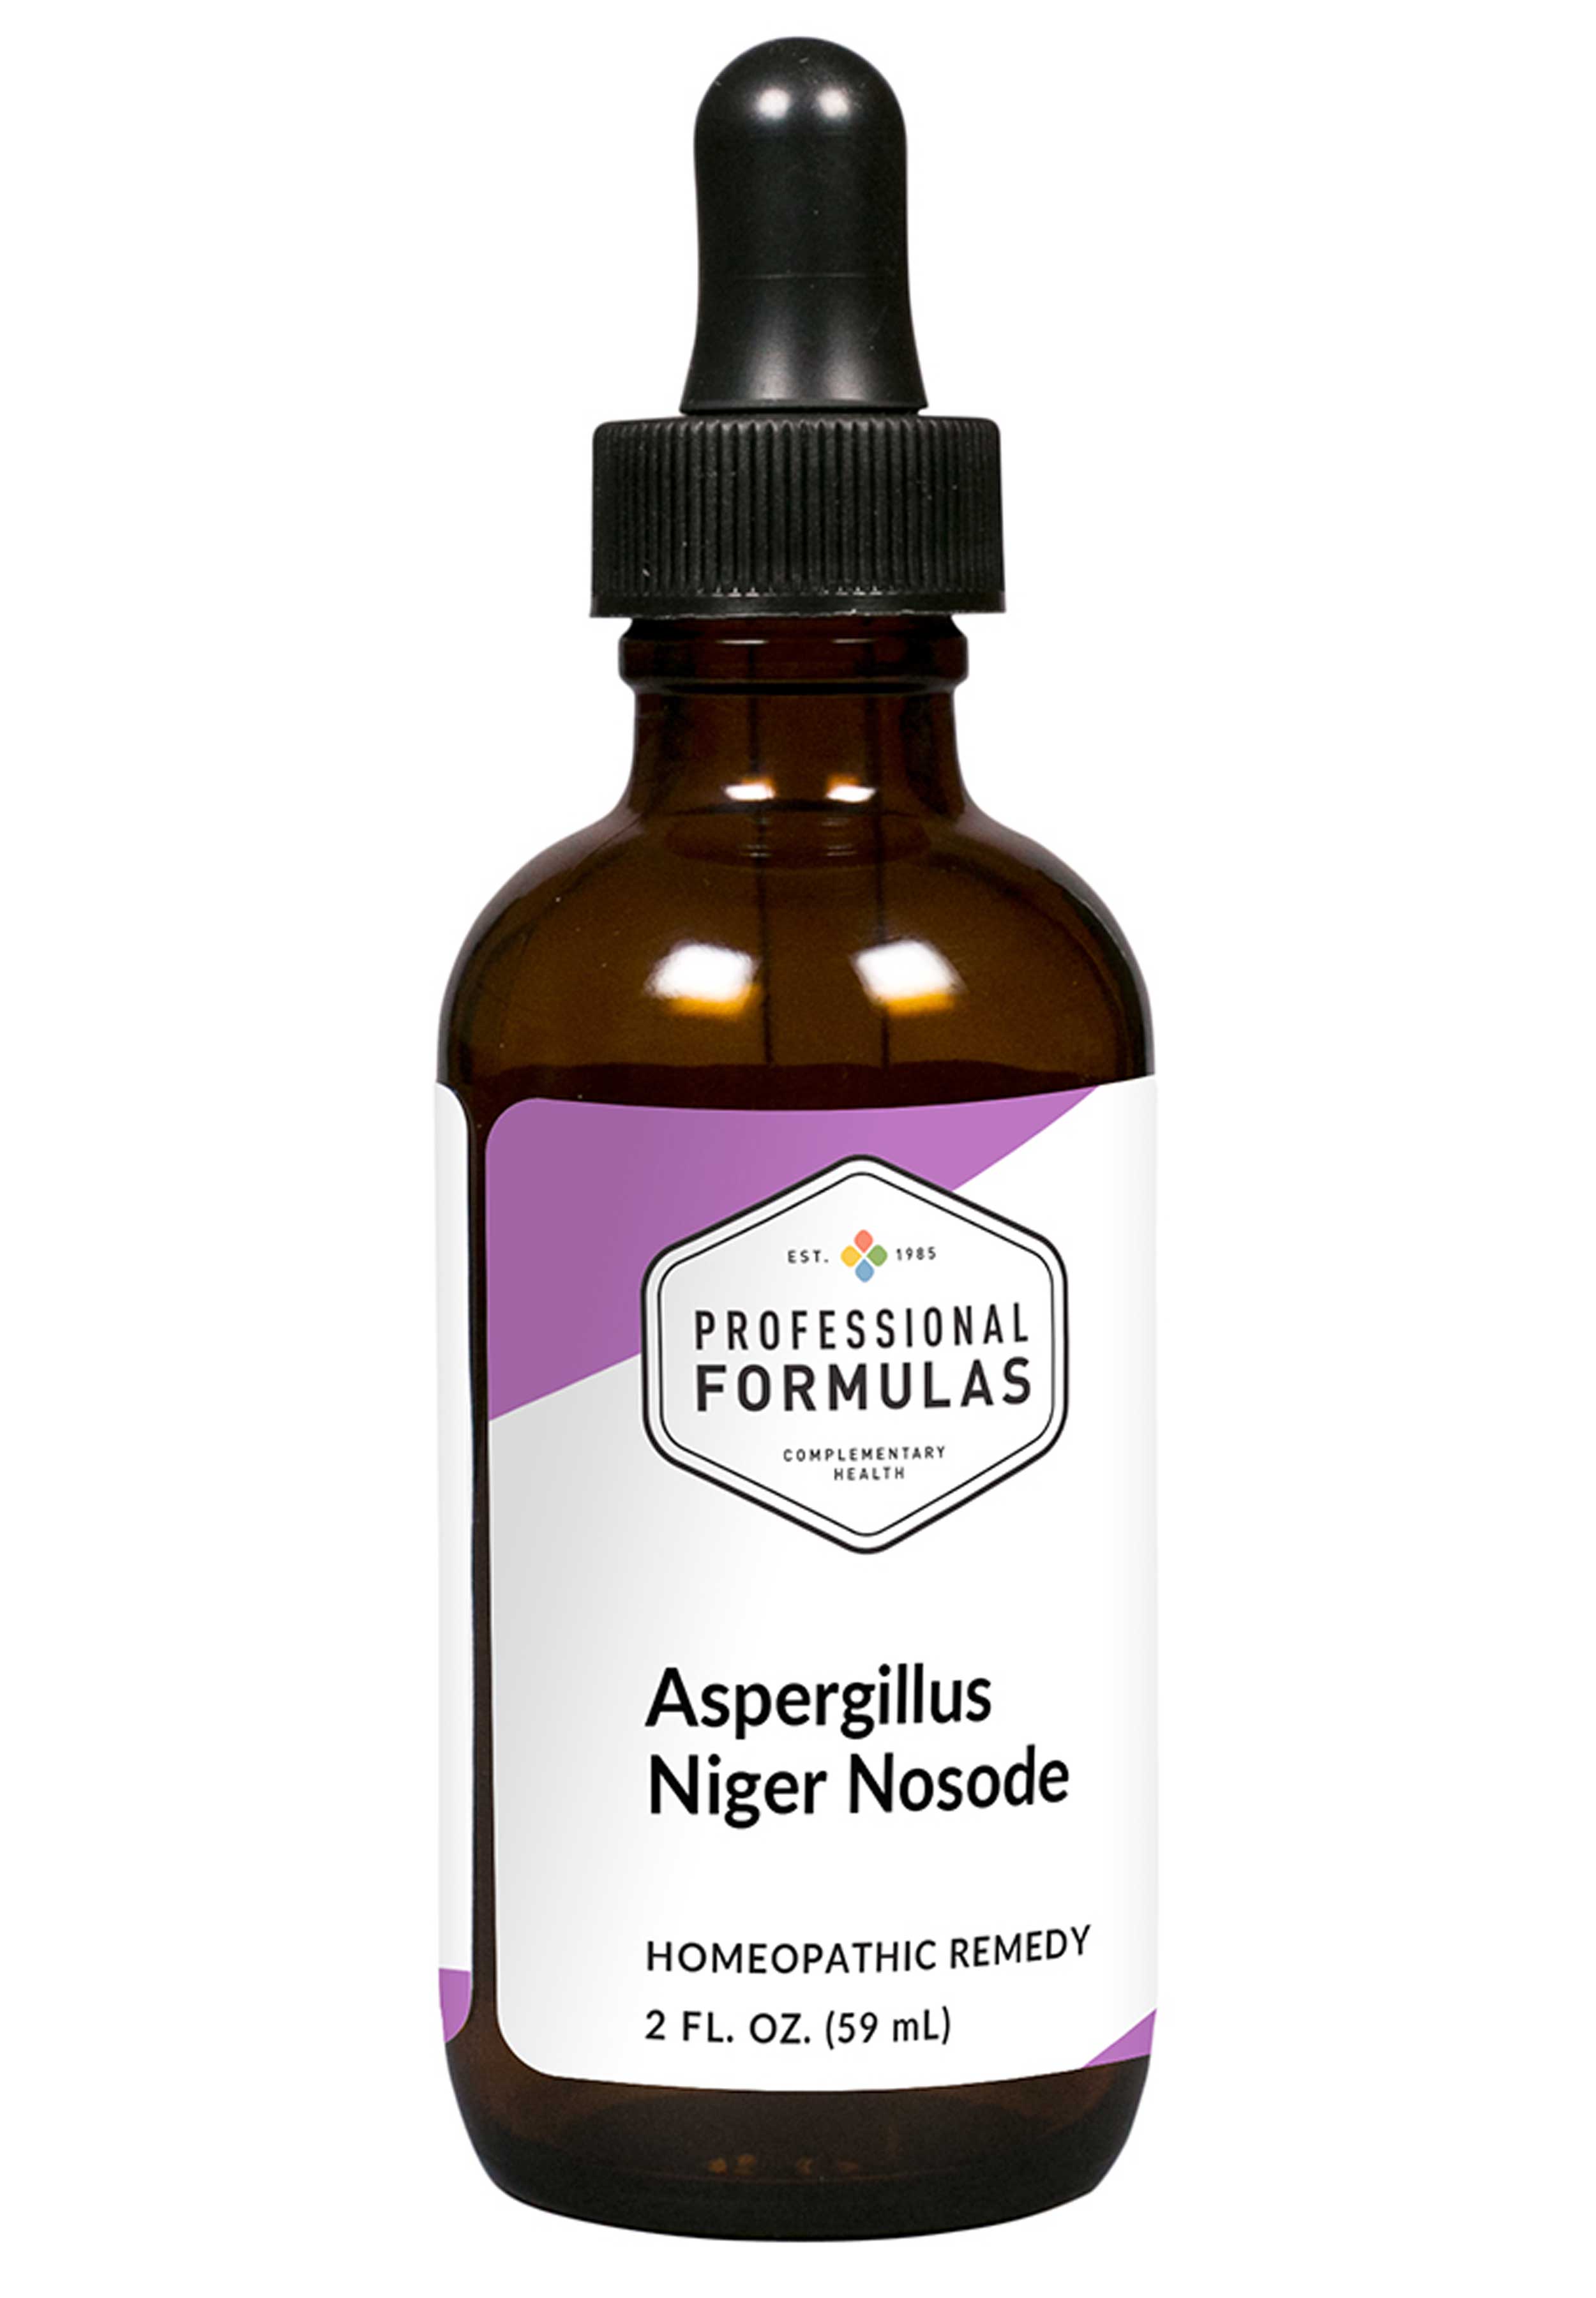 Professional Formulas Aspergillus Niger Nosode